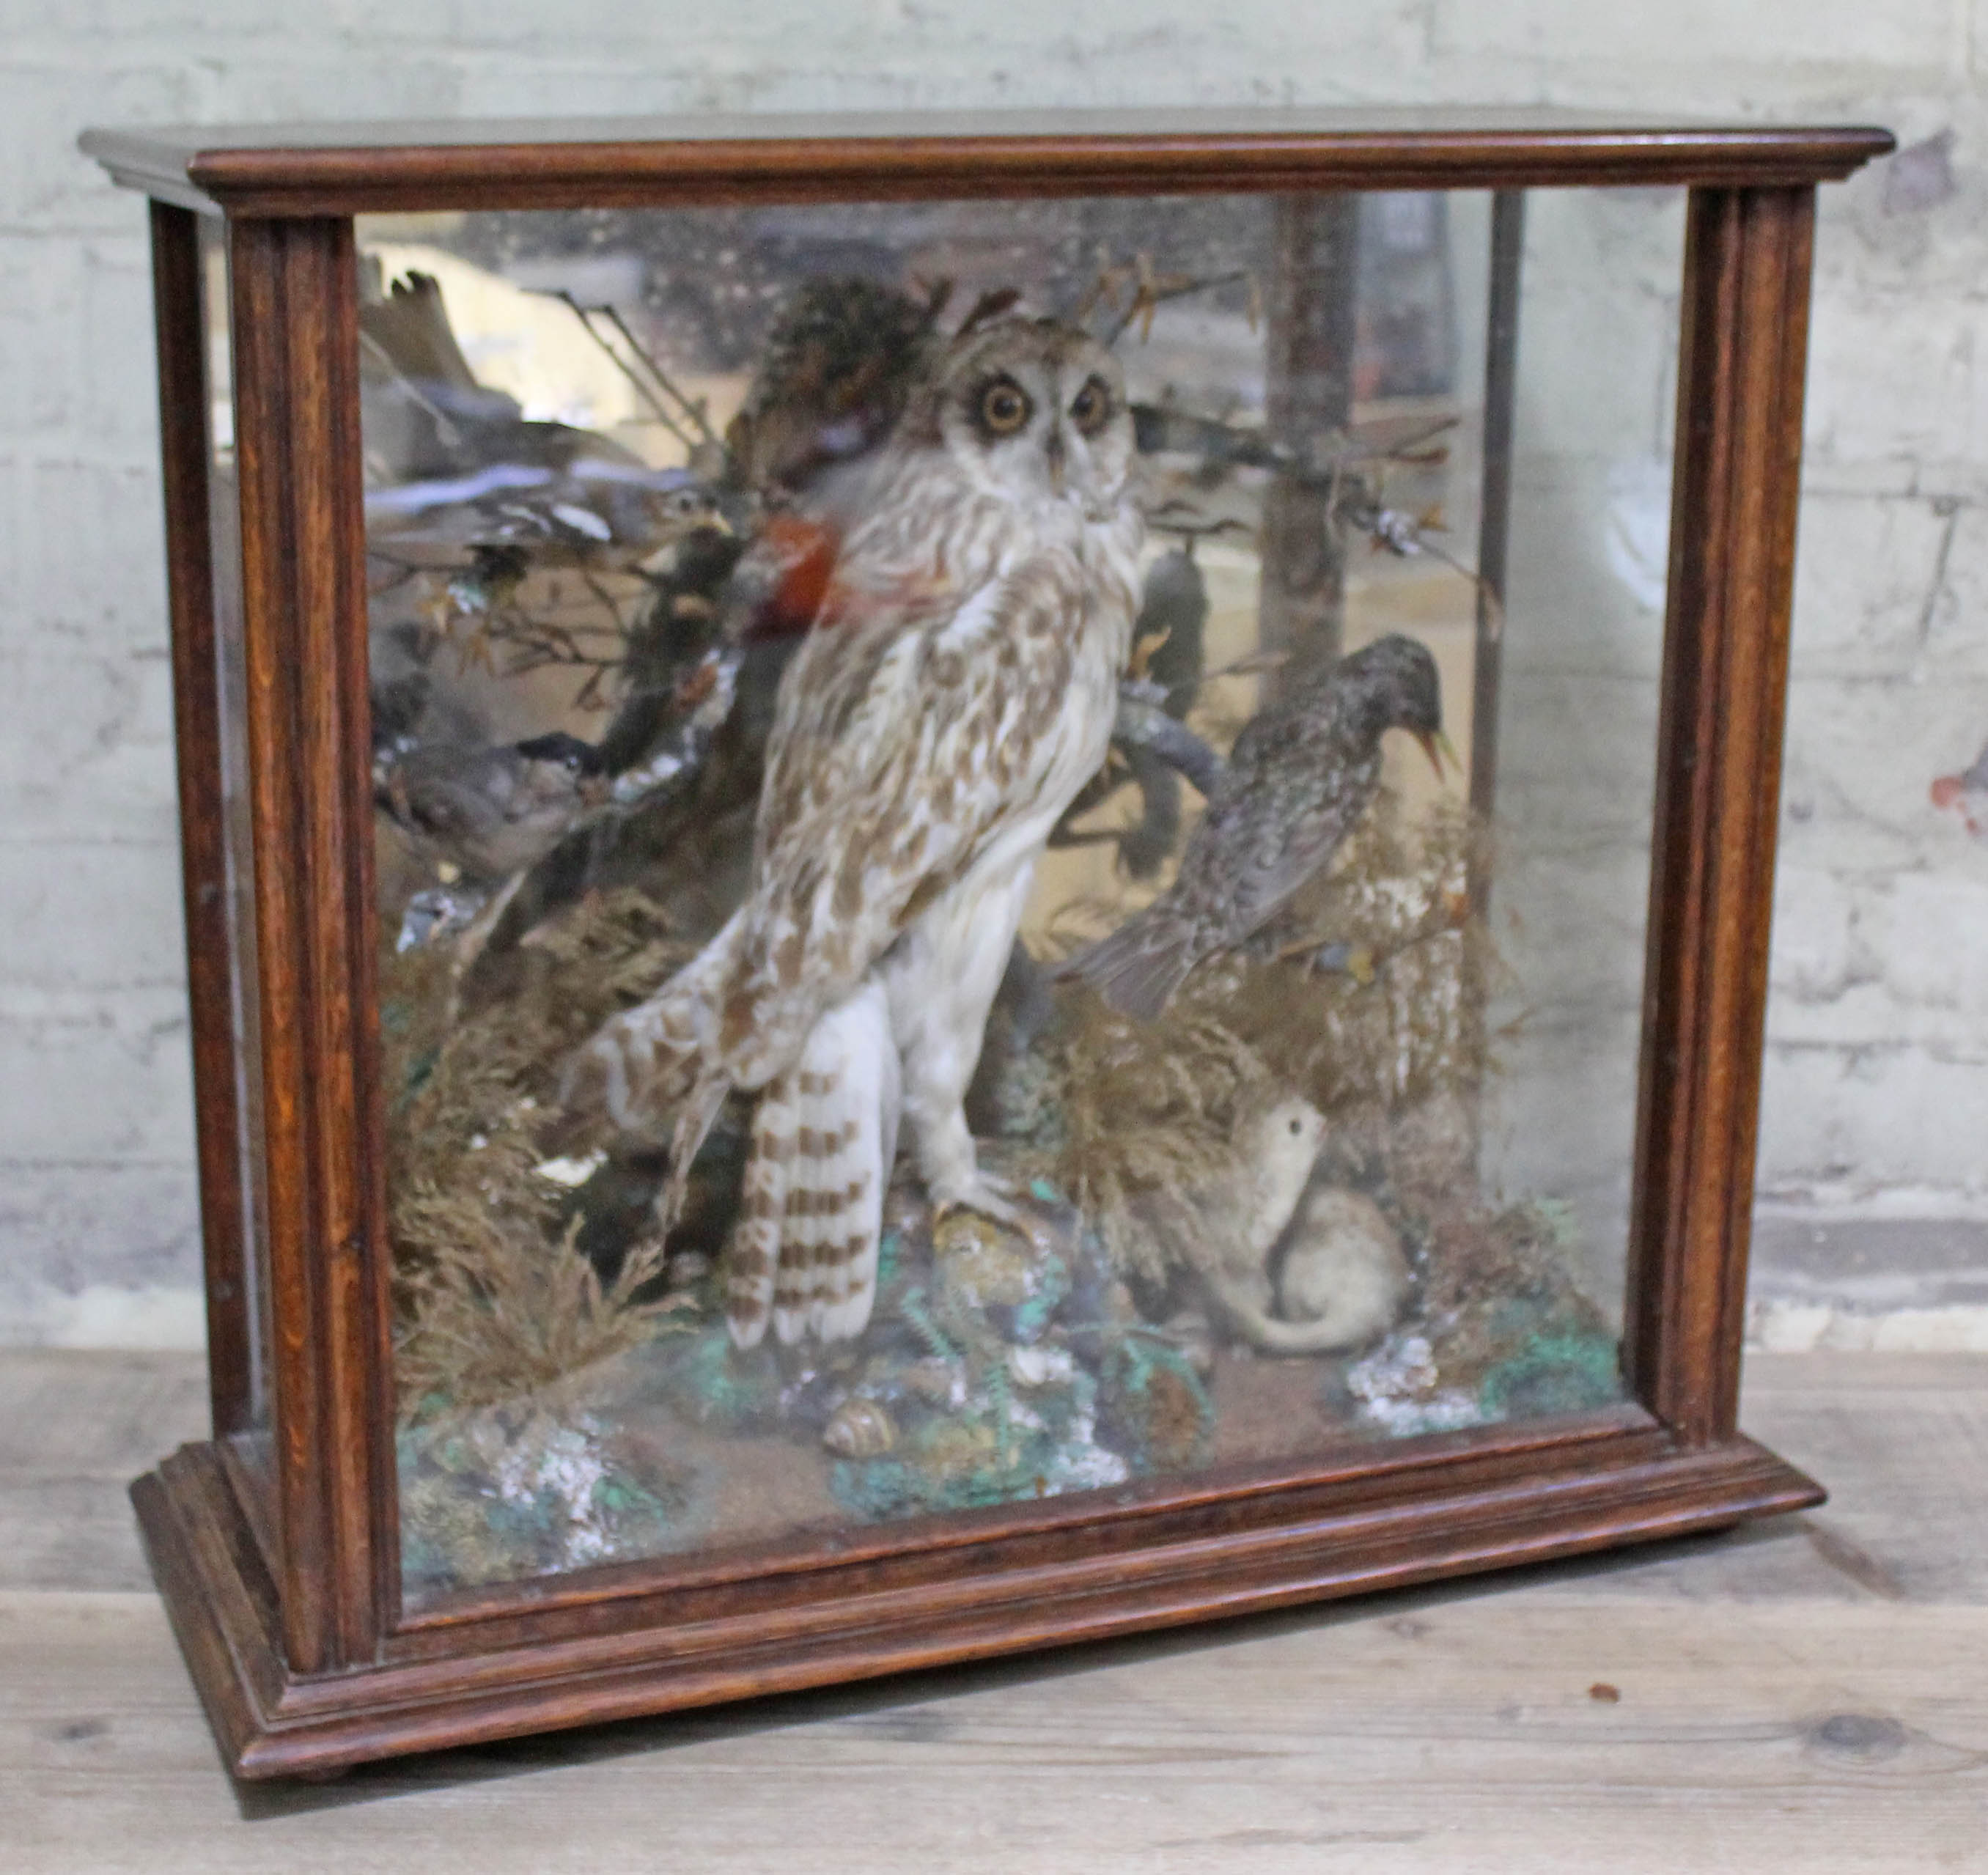 An Edwardian taxidermy oak display case featuring various birds including an owl, width 60cm,